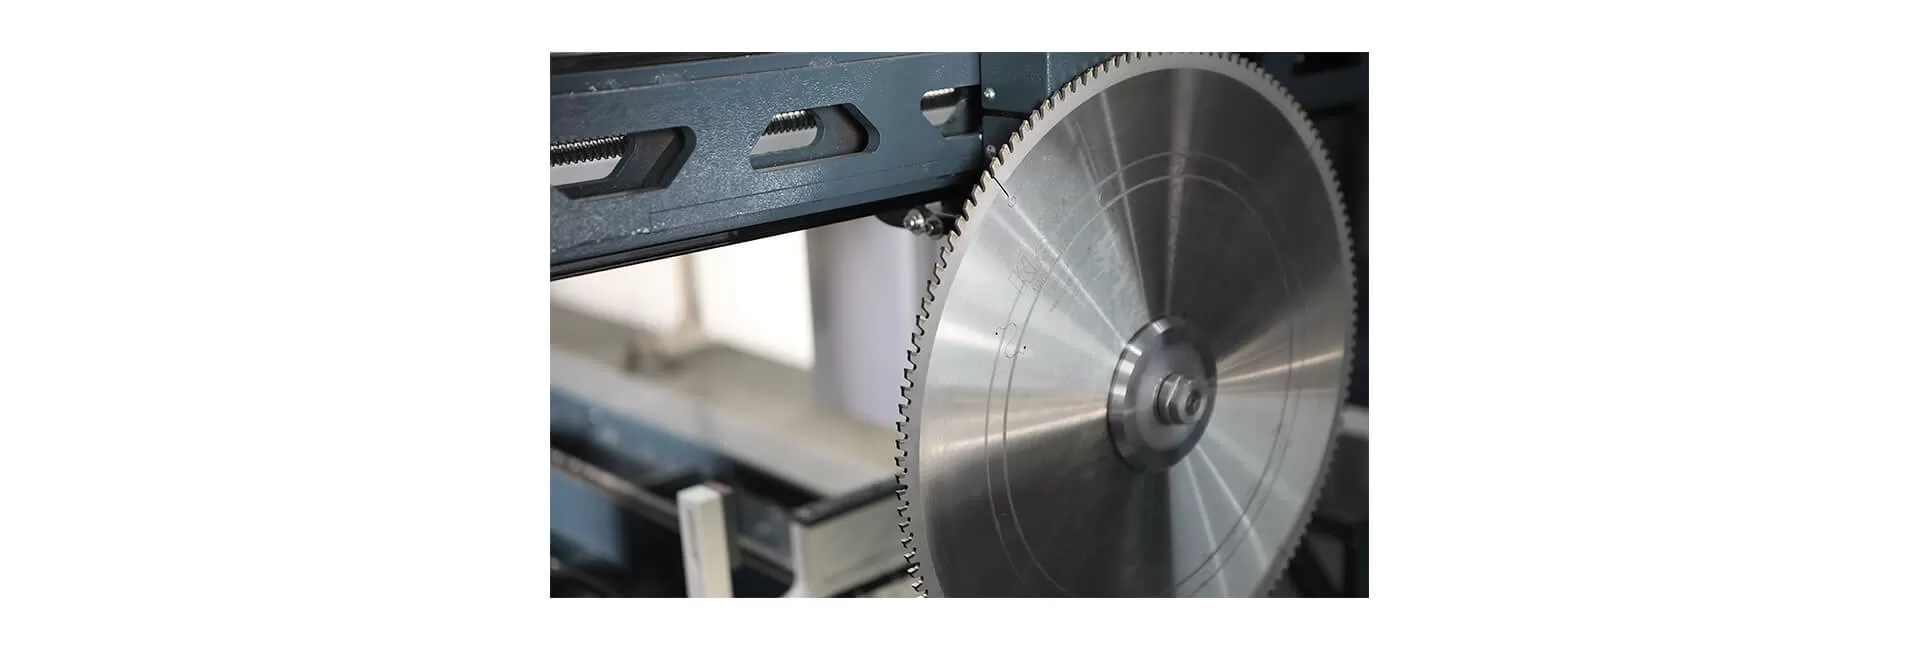 INO CARRERA 4 Axis CNC Profile Machining & Cutting Center